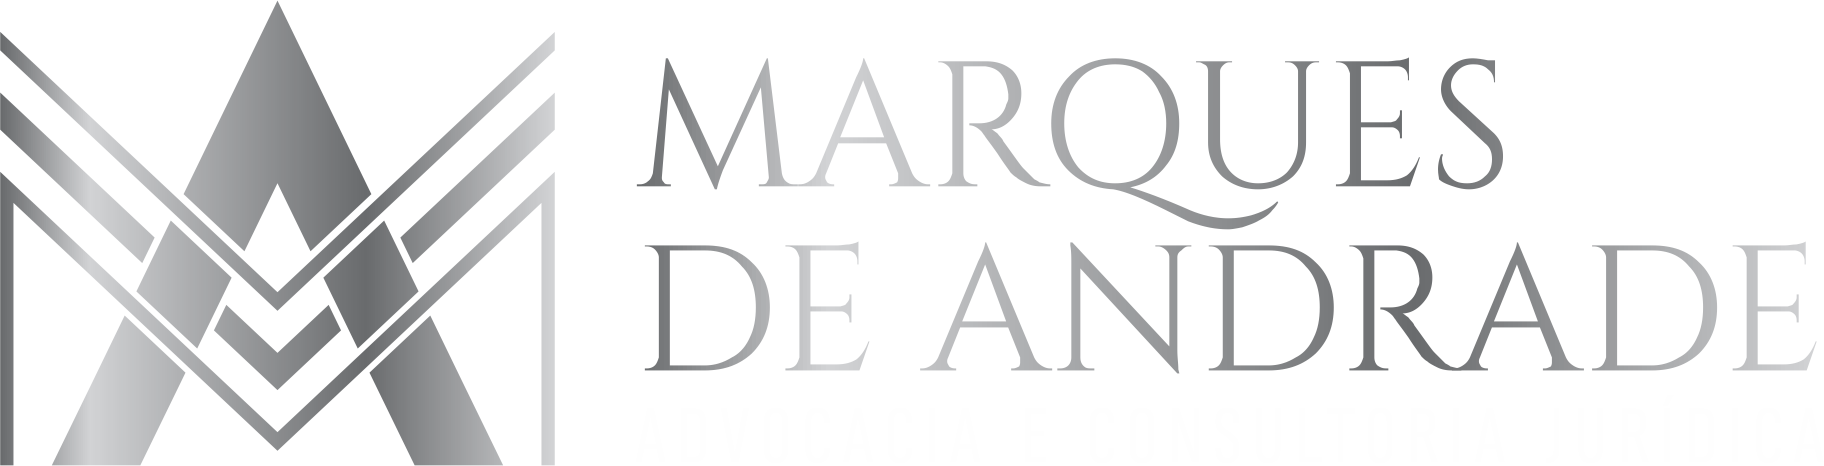 Marques de Andrade